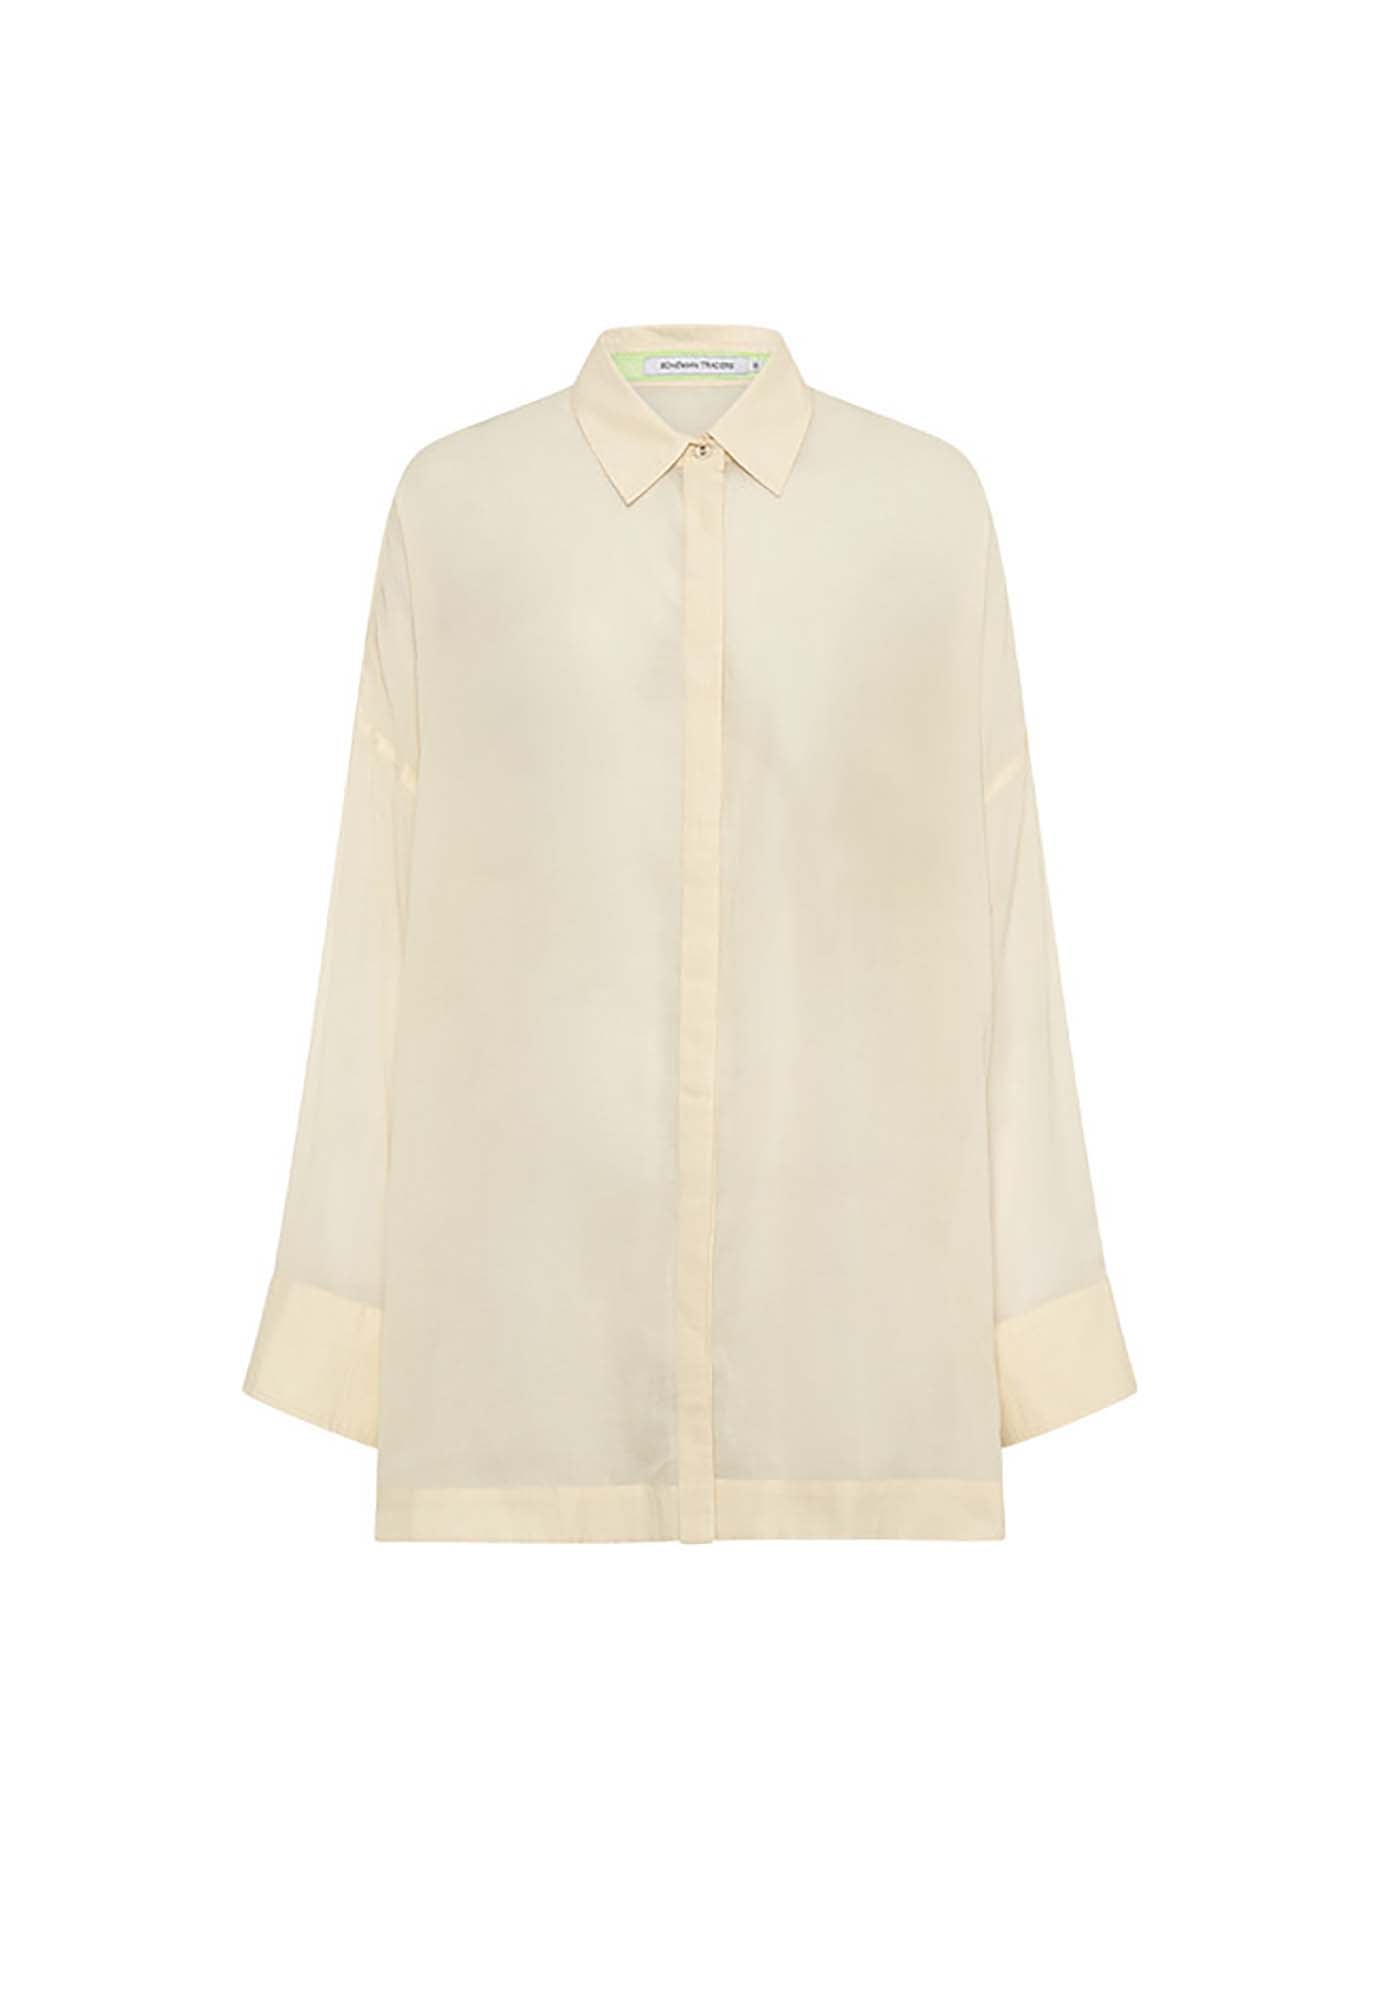 bohemian traders - oversized blouse - cloud cream